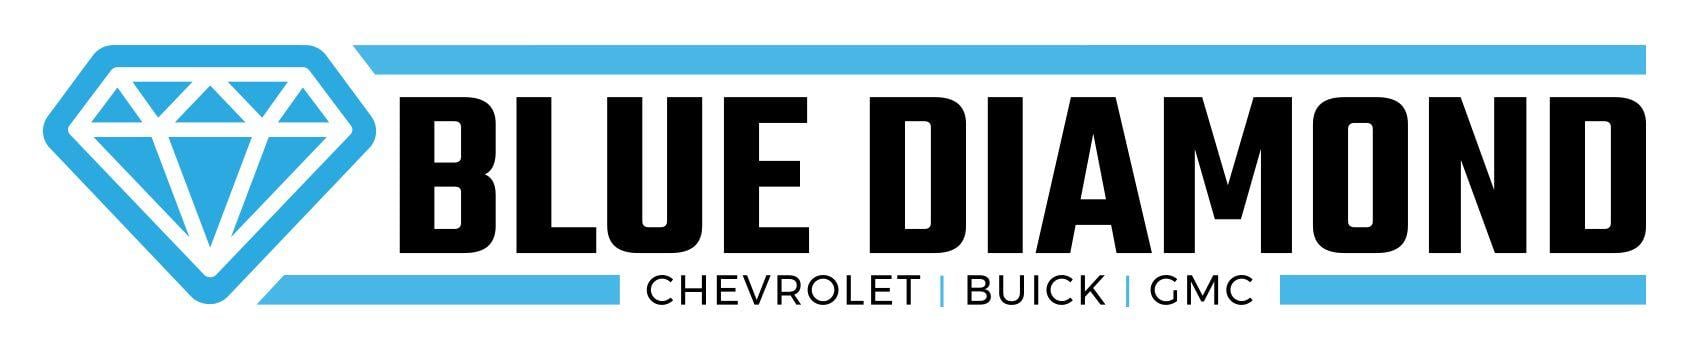 Diamond Chevrolet Logo - 1500 at Blue Diamond Chevrolet Buick GMC, Price